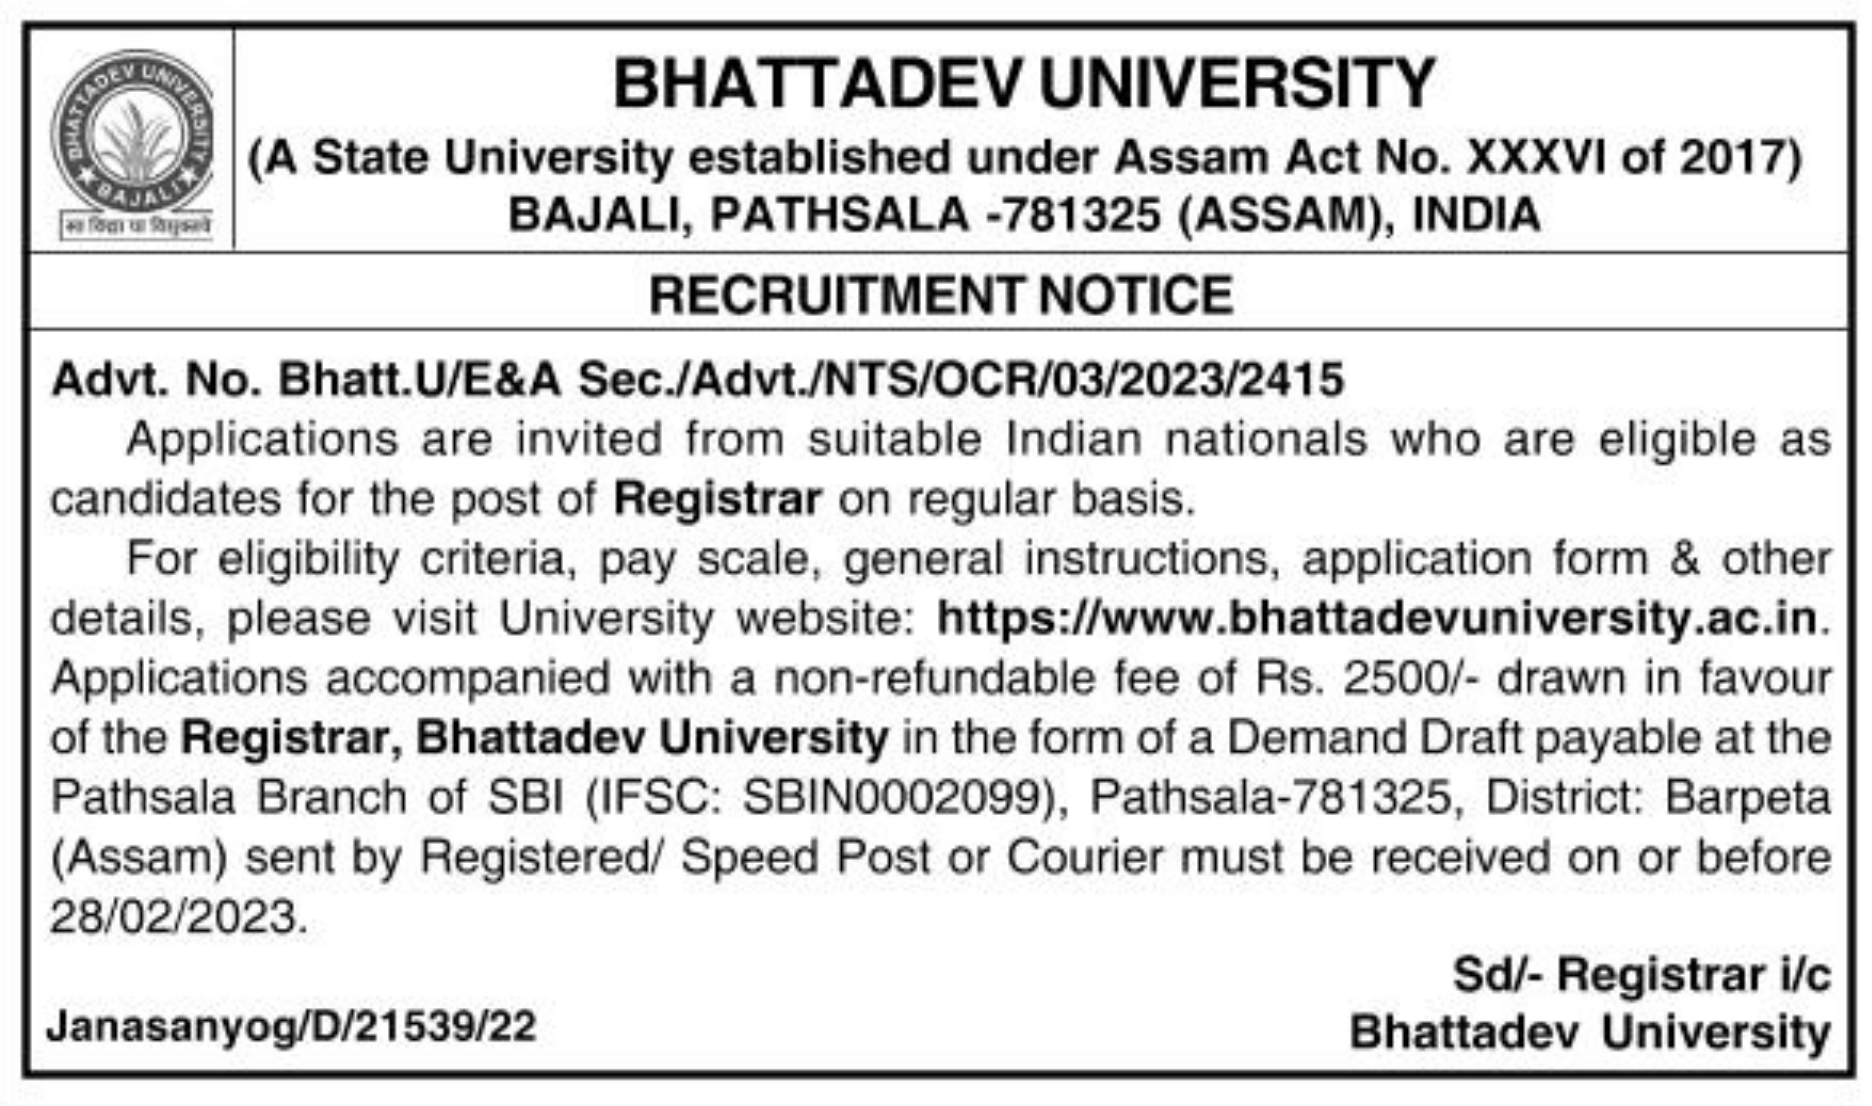 Bhattadev University Recruitment 2023: Registrar Vacancy